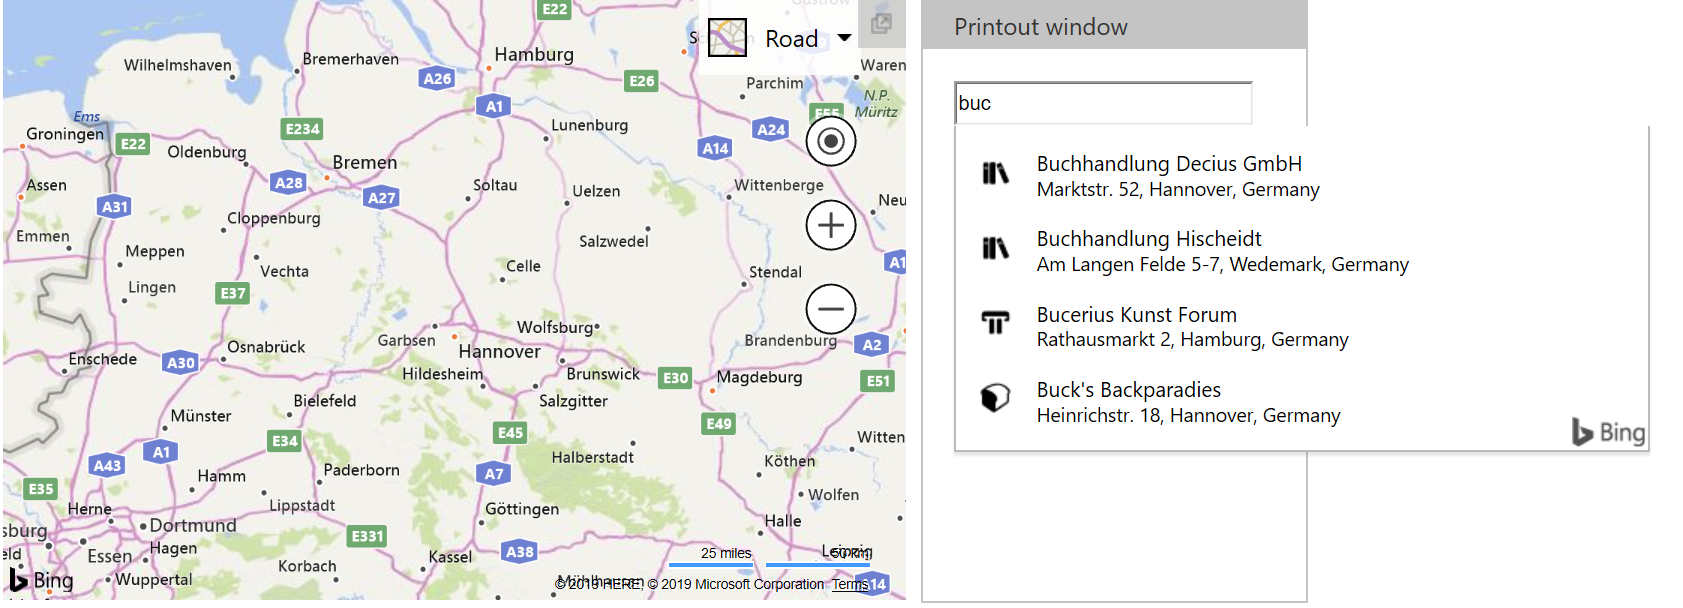 Bing Maps Autosuggest - Germany